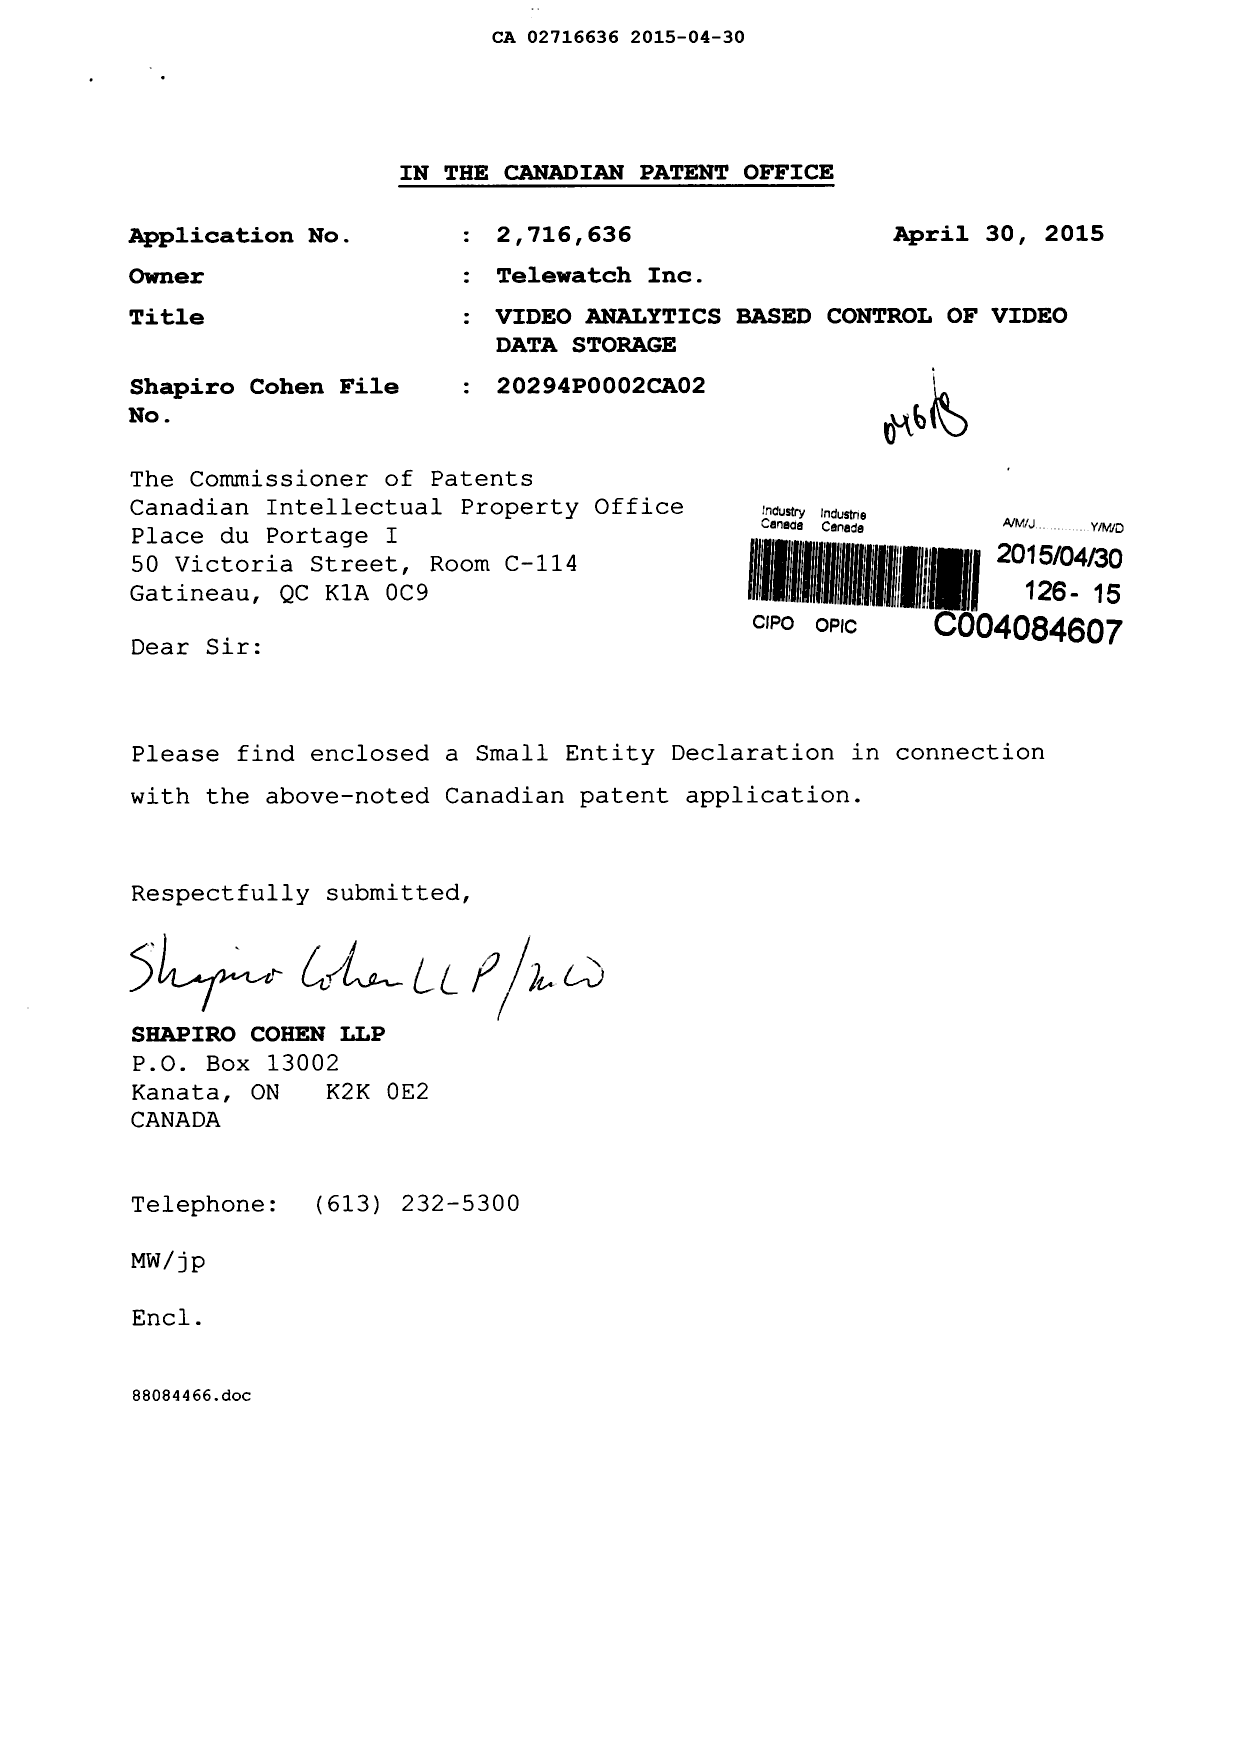 Canadian Patent Document 2716636. Correspondence 20141230. Image 1 of 2